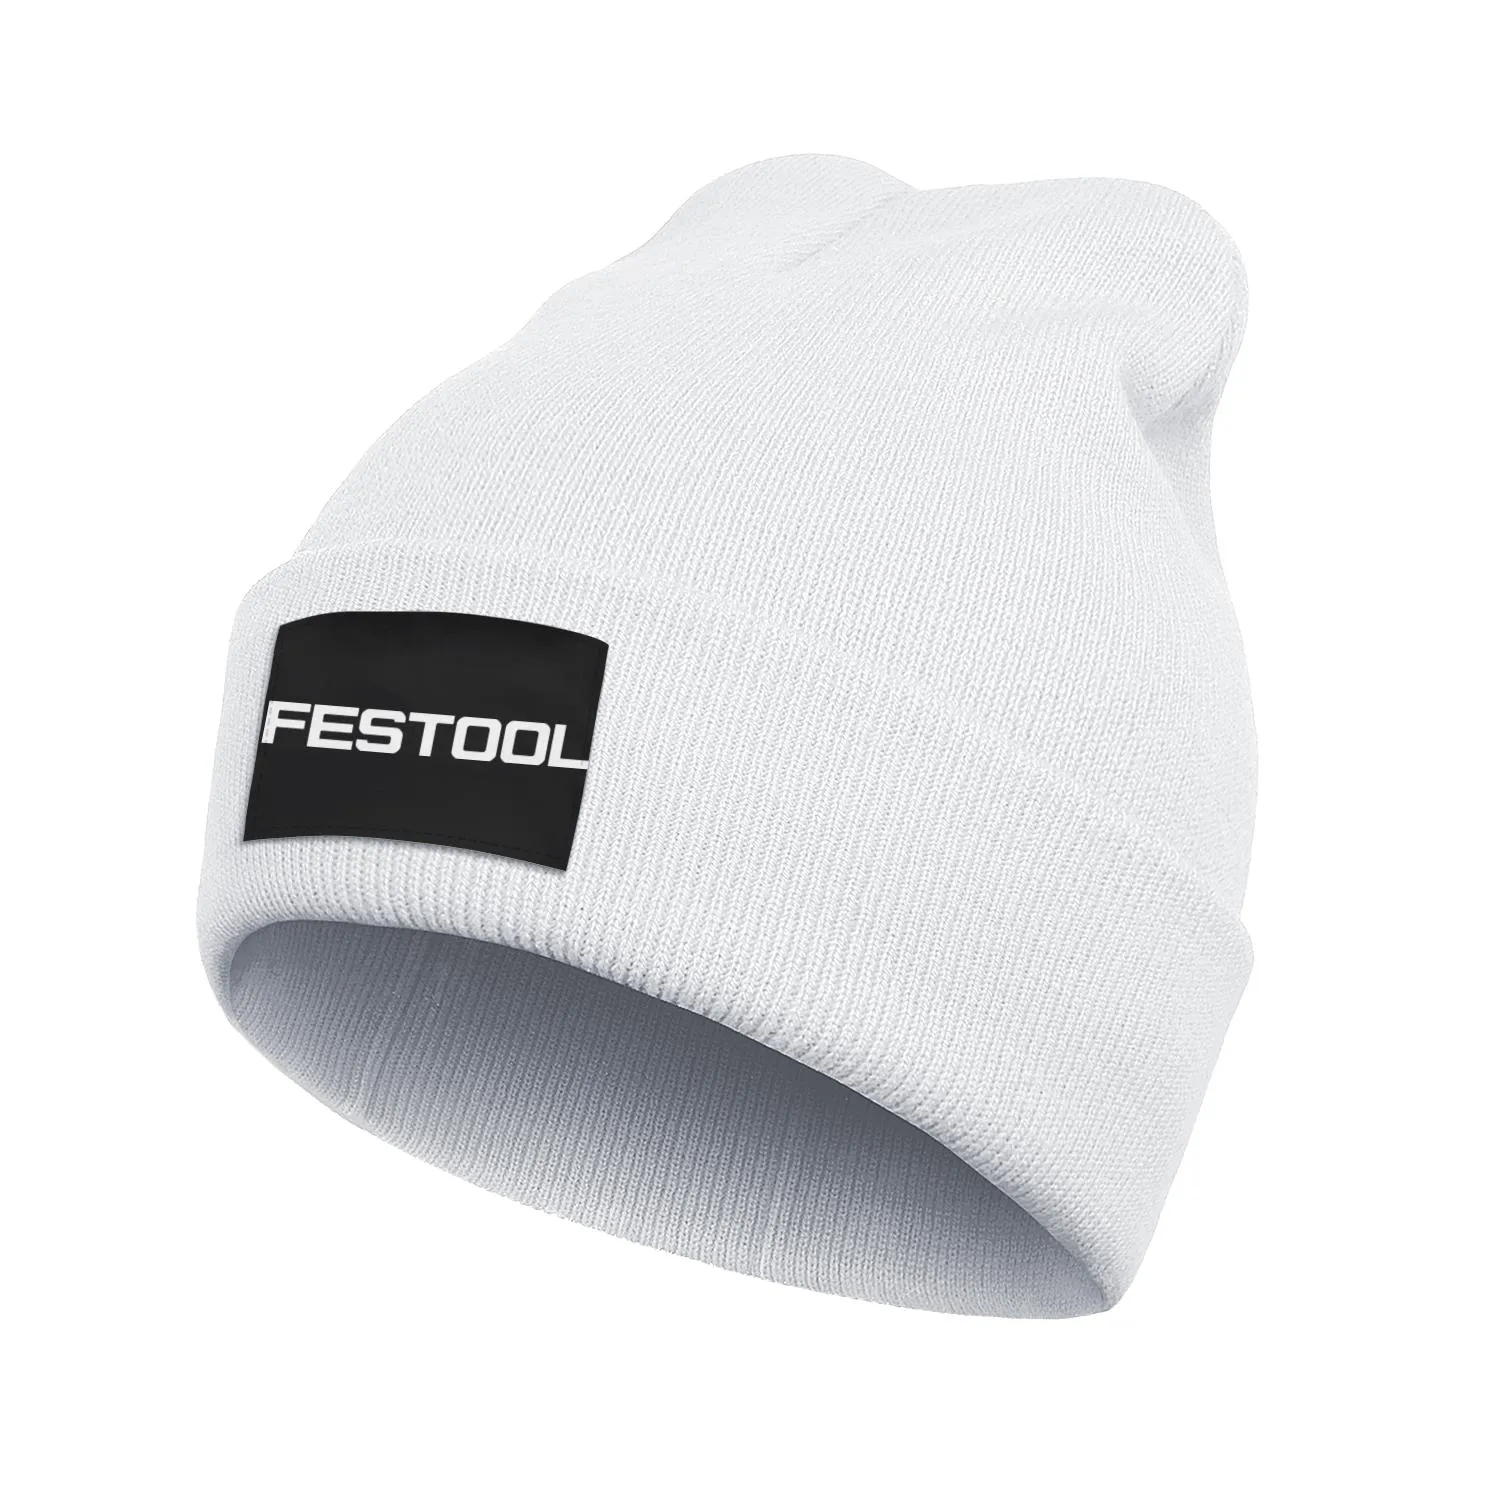 Moda Festool dominó serra de pista de mármore branco esqui quente gorro chapéus lixadeira de crochê vintage old20674586495119